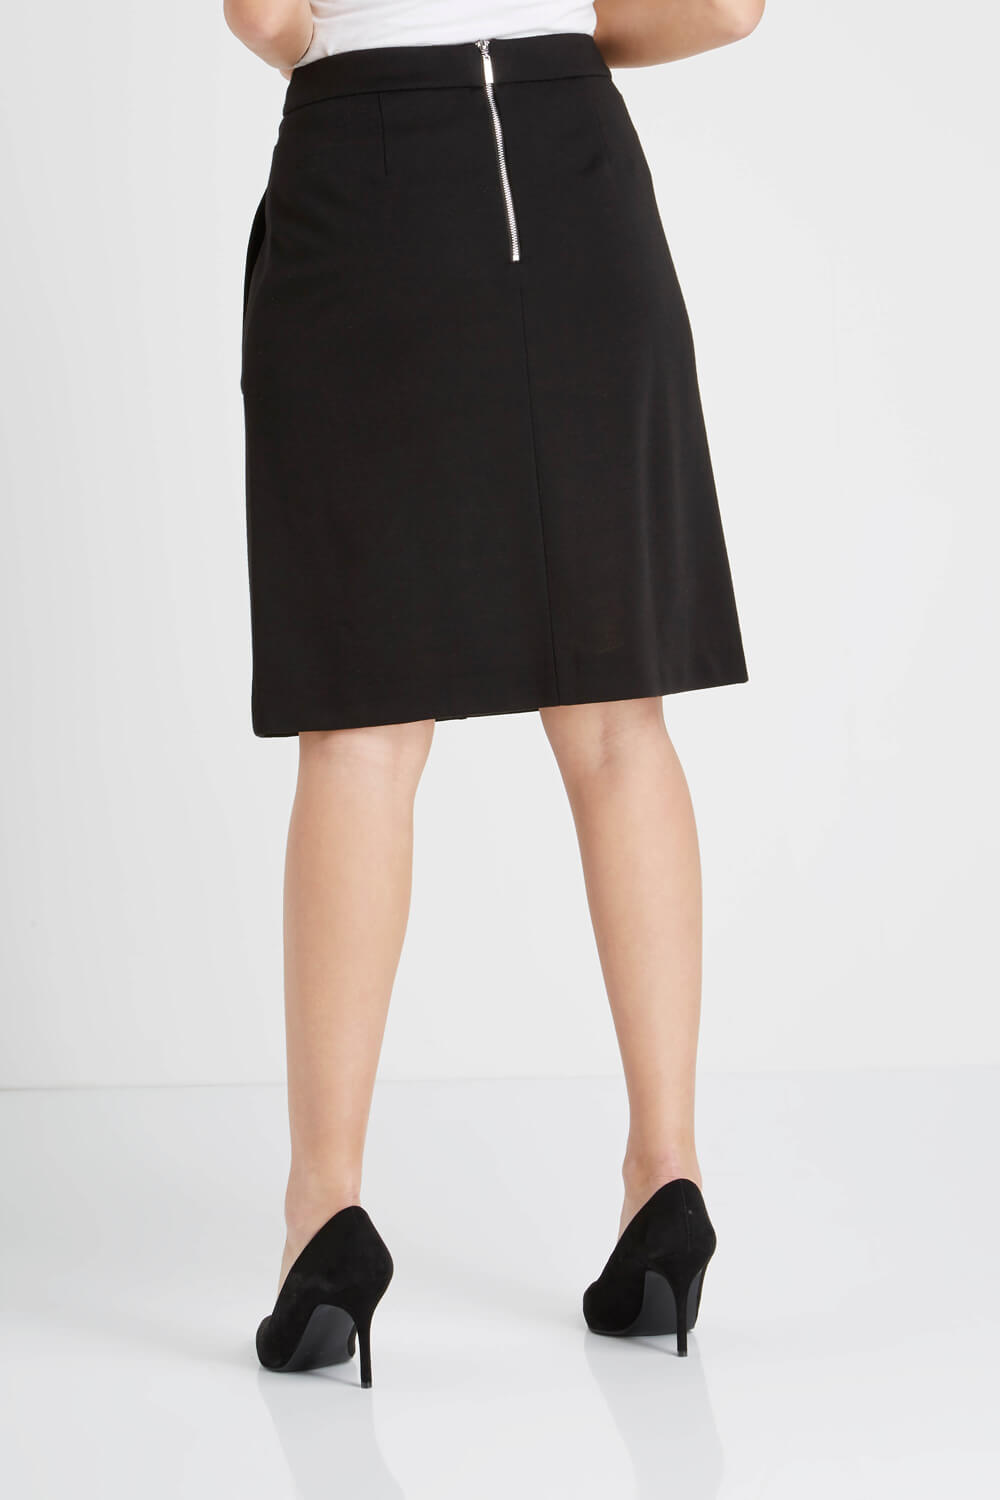 Black Textured Ponte Skirt, Image 2 of 5